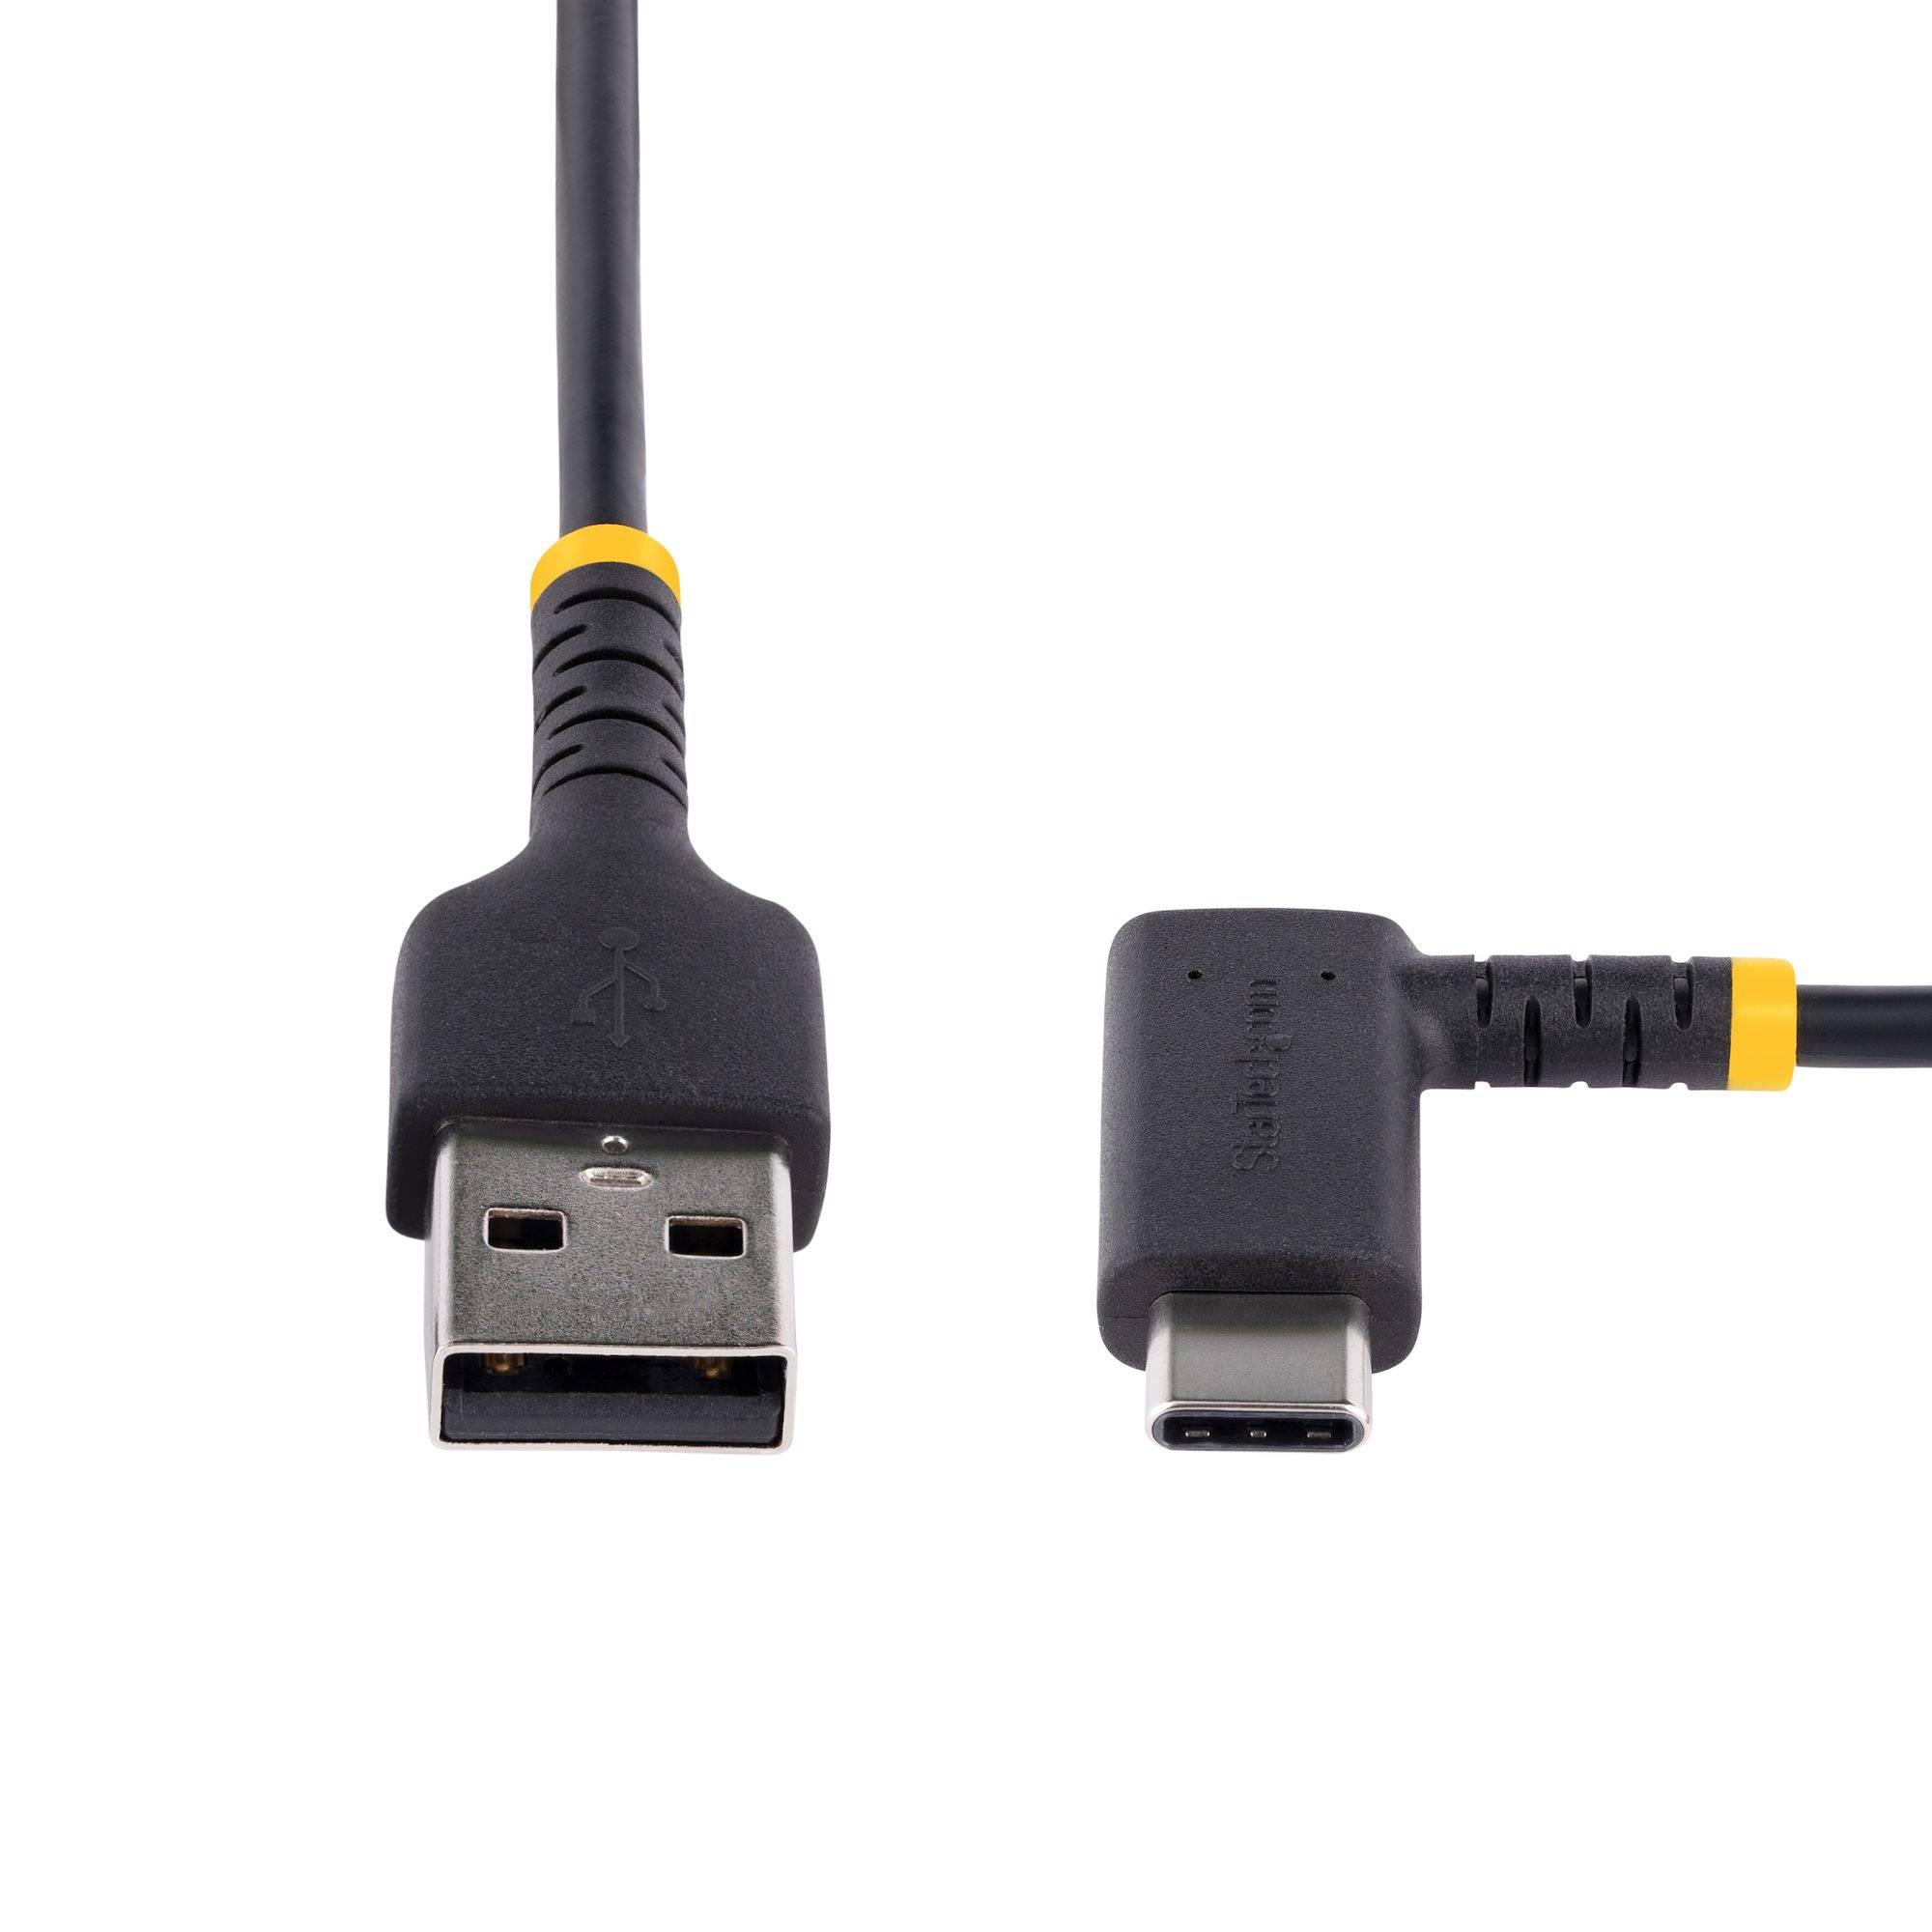 Rca Informatique - image du produit : USB-A TO USB-C CHARGING CABLE 2M RIGHT ANGLE USB-C USBC CABLE